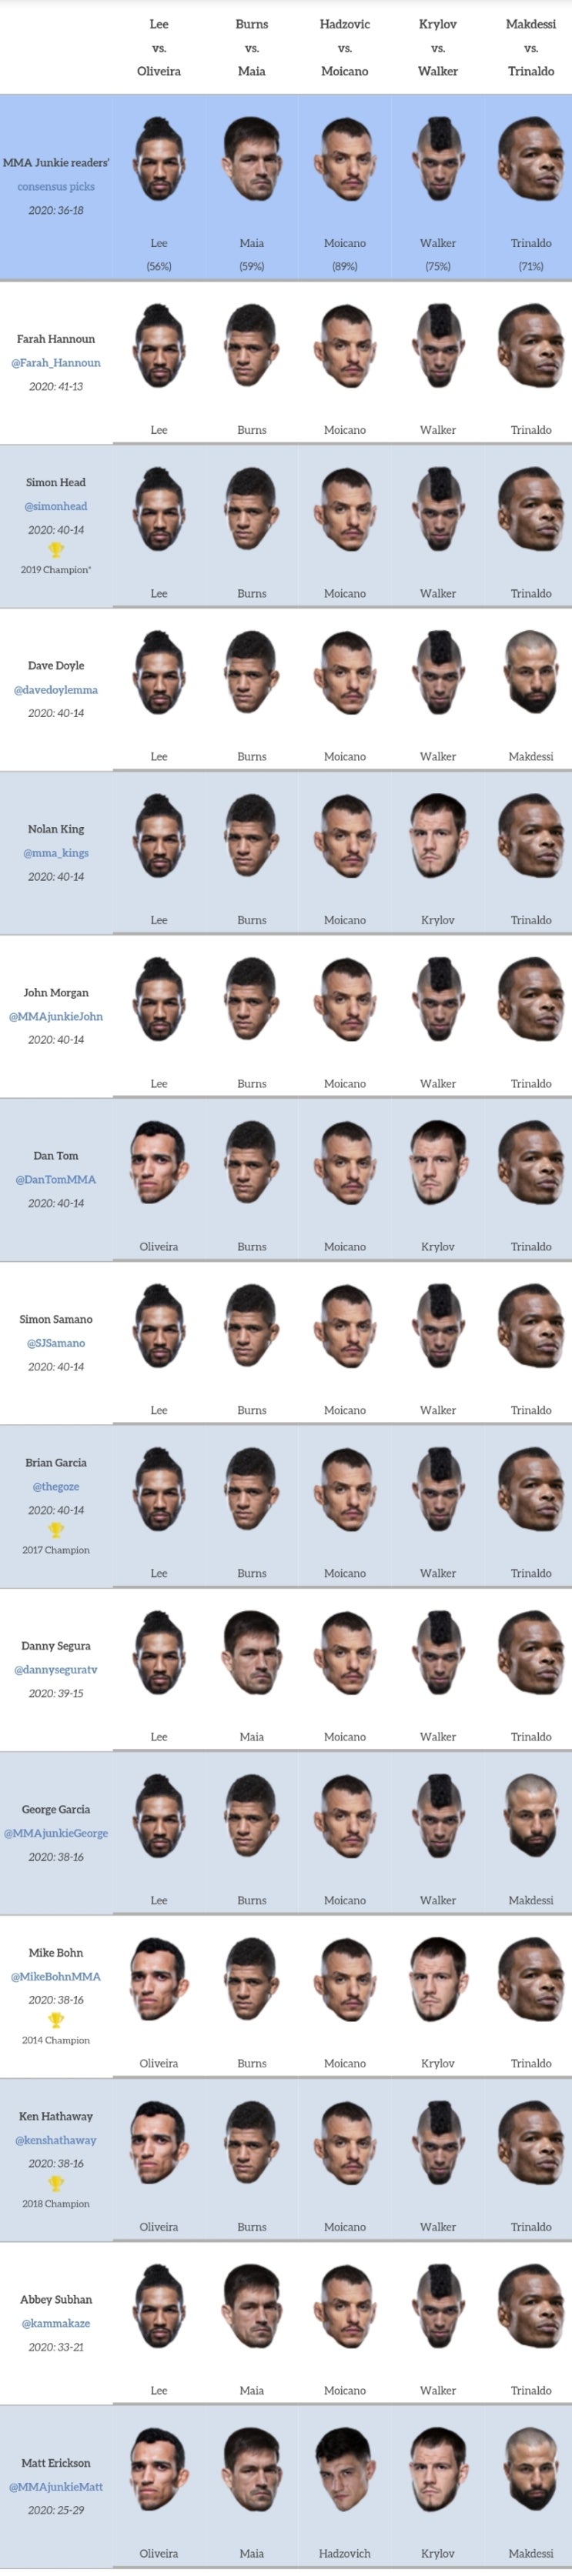 UFC 브라질: 리 vs 올리베이라 미디어 예상 및 배당률